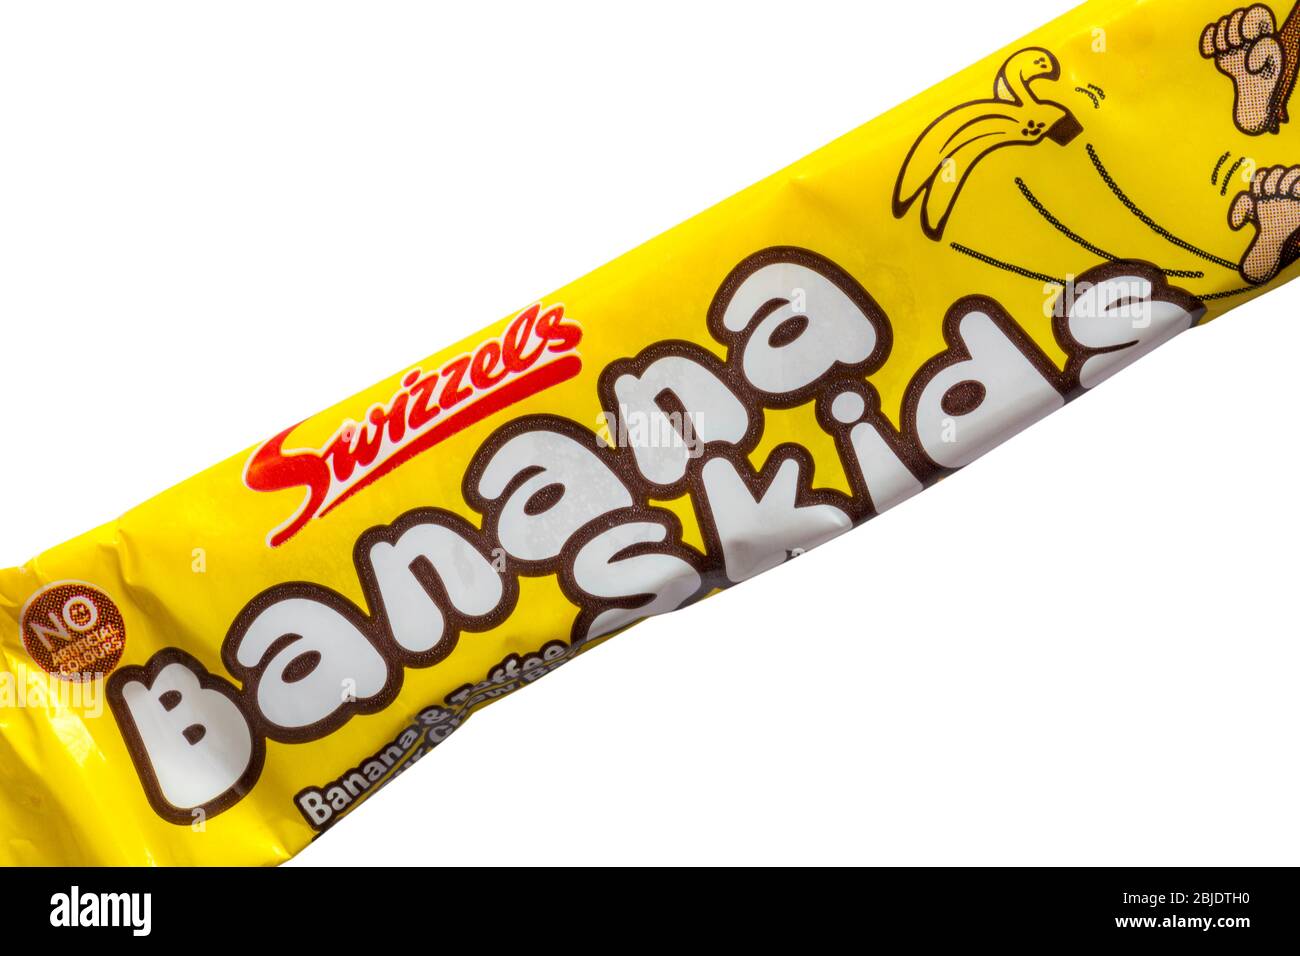 Swizzels banana skids banana & toffee flavour chew bar set on white background Stock Photo